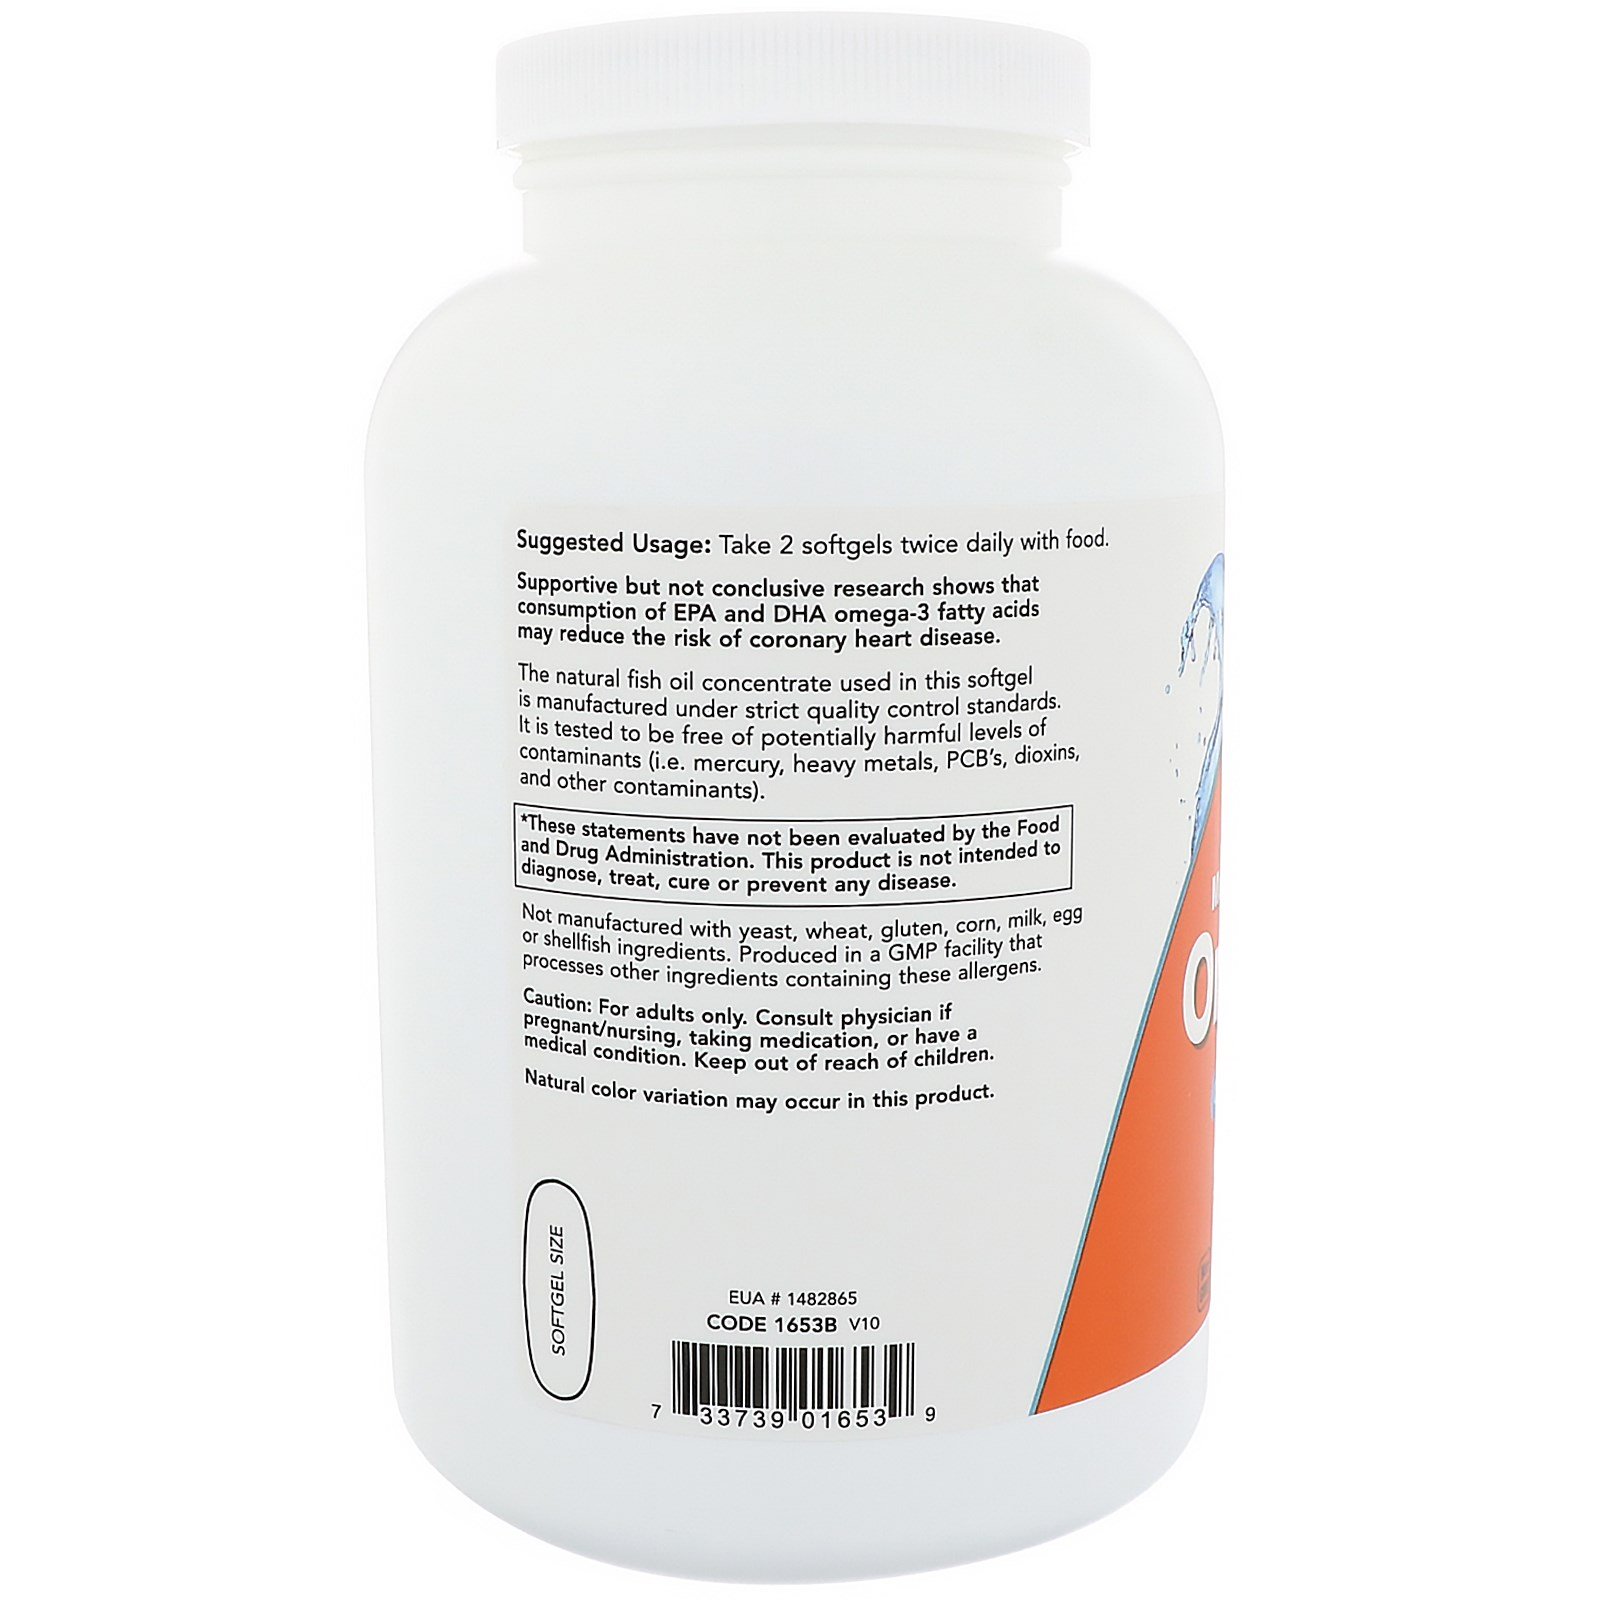 Omega-3 Now Foods - Омега-3 180EPA/120DHA 1000 мг - 500 капсул